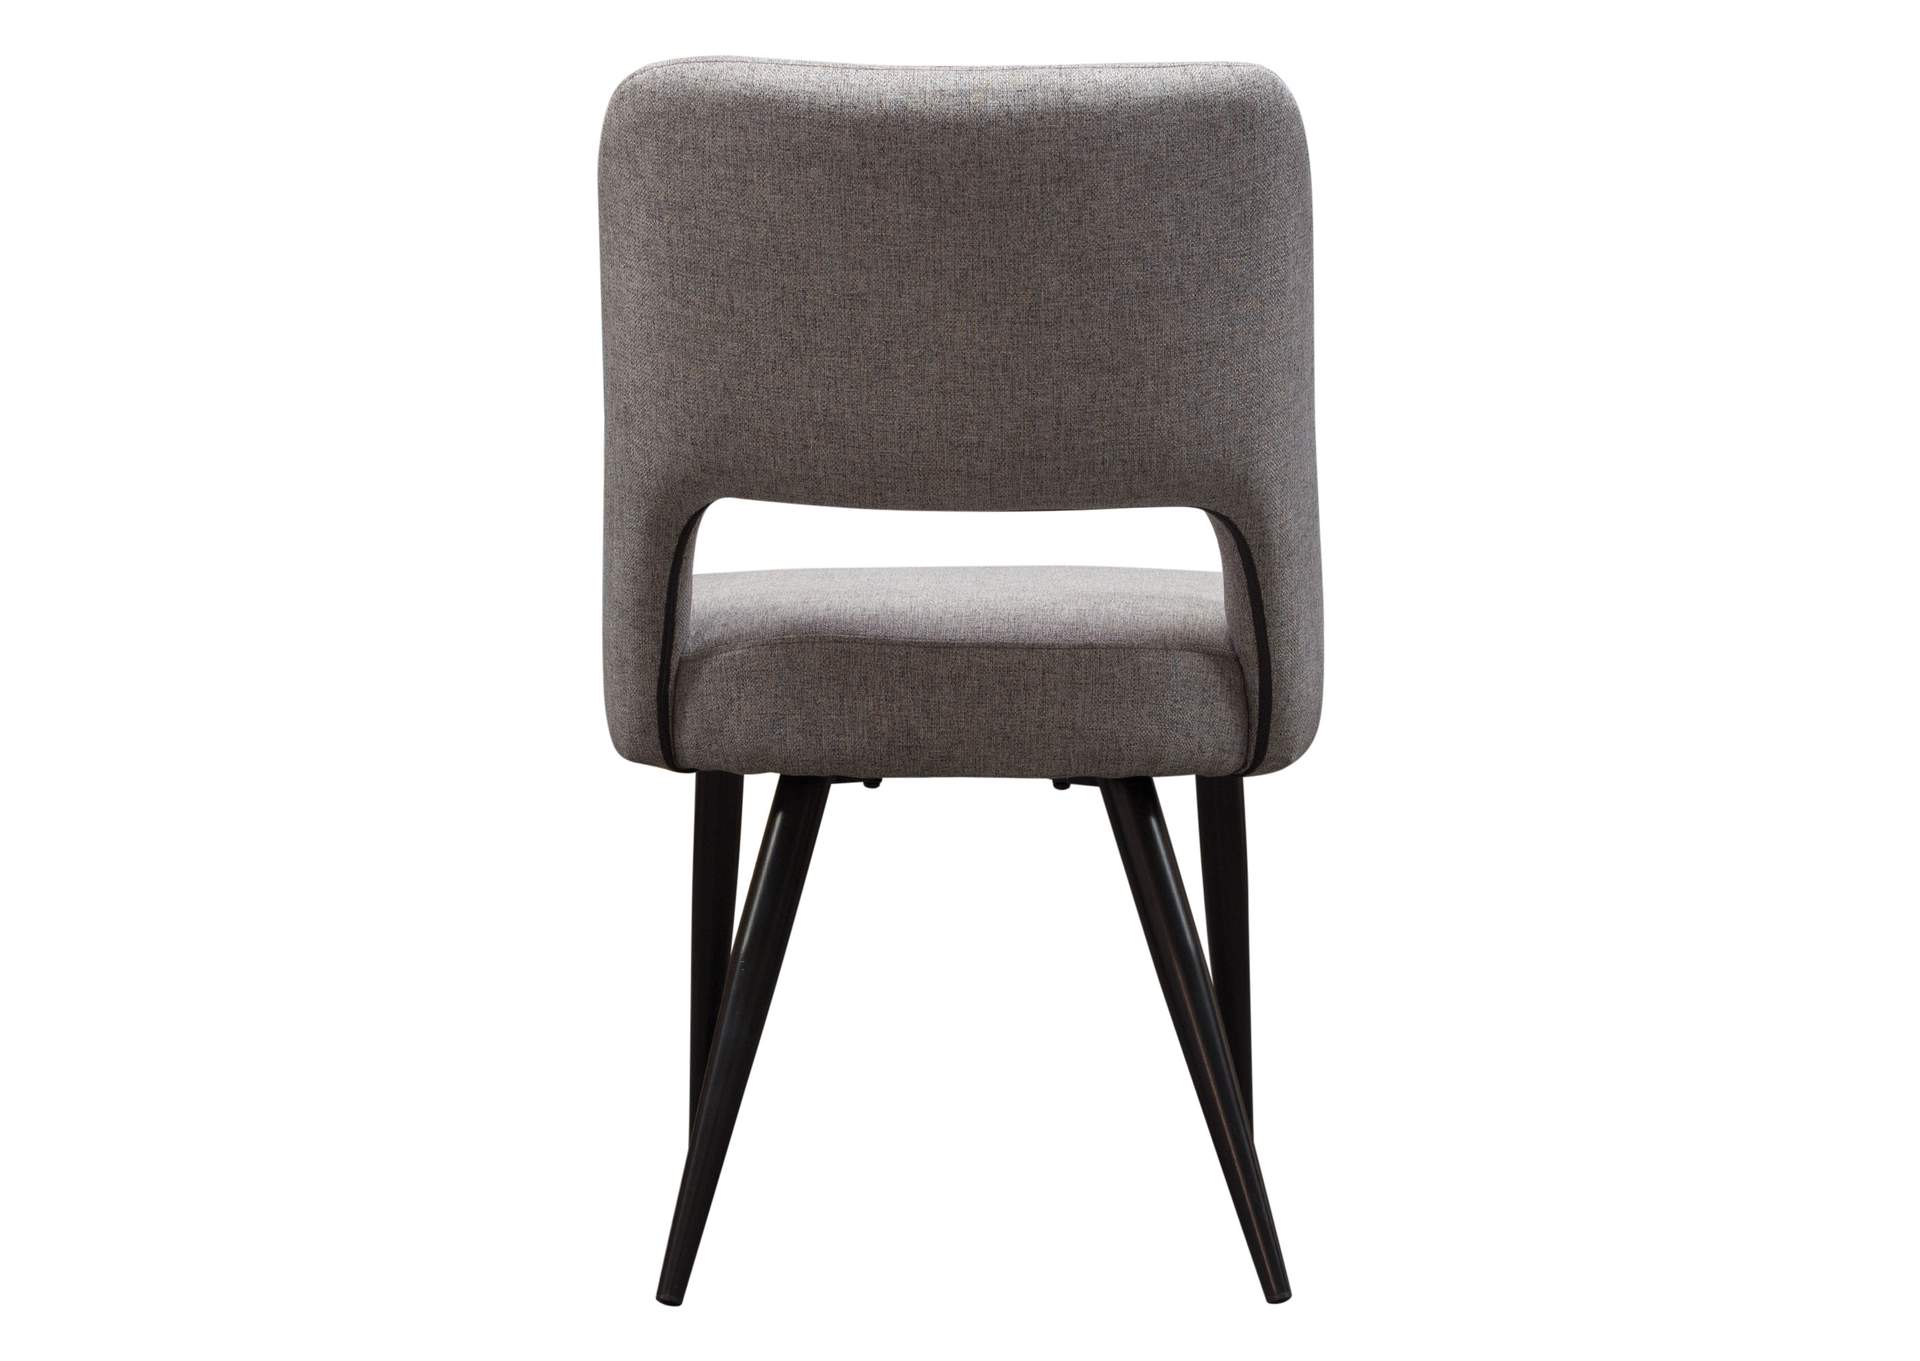 Set of (2) Reveal Dining Chairs in Grey Fabric w/ Black Powder Coat Metal Leg by Diamond Sofa,Diamond Sofa